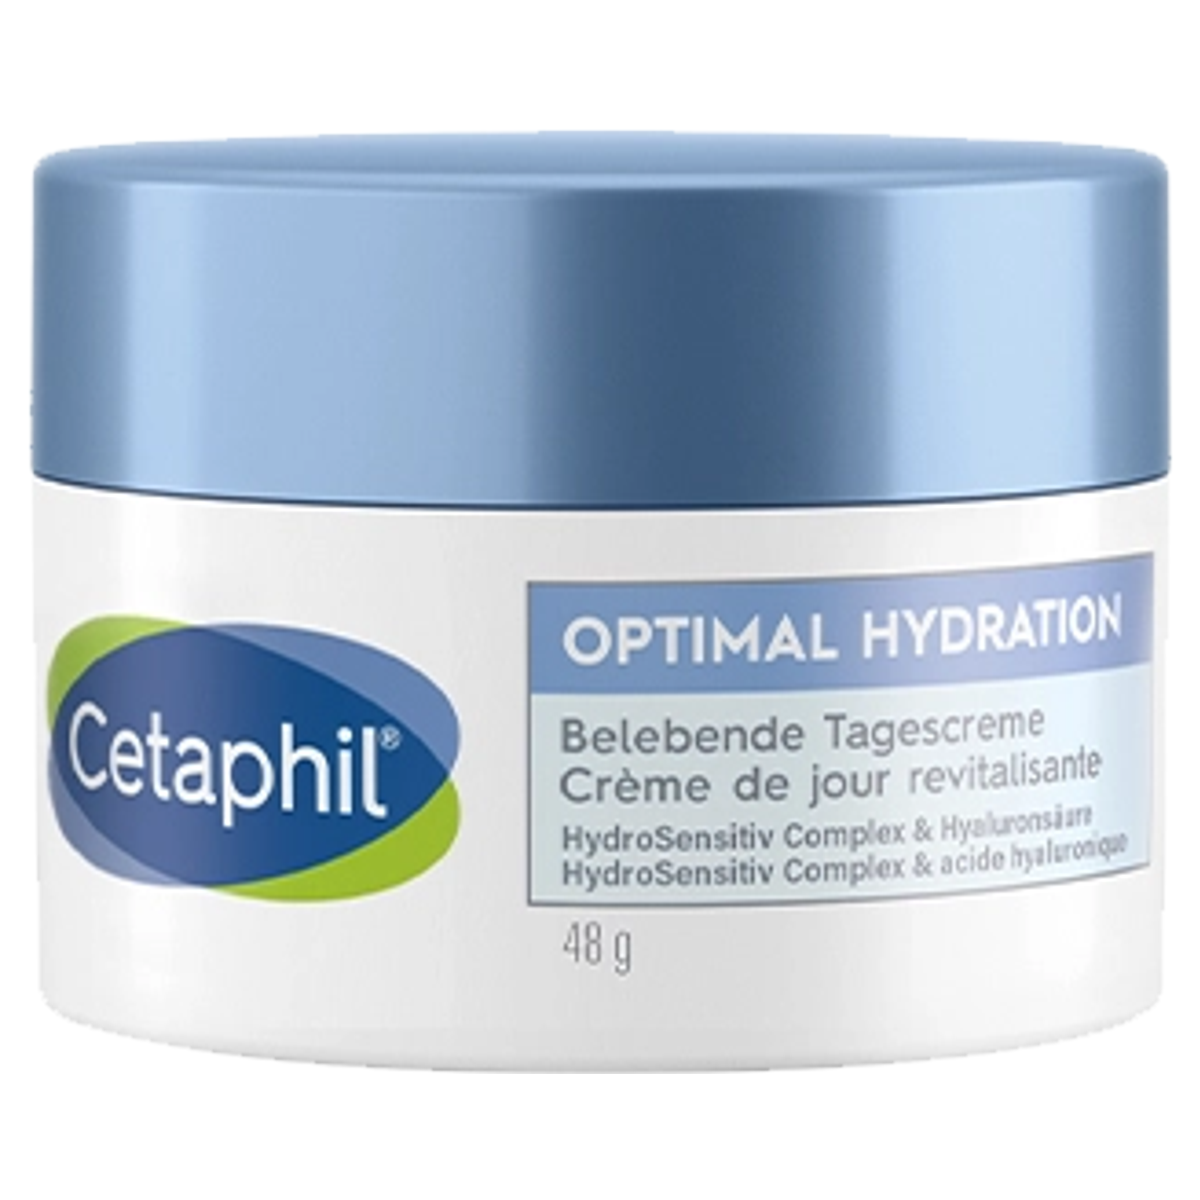 Cetaphil Optimal Hydration belebende Tagescreme 48 g